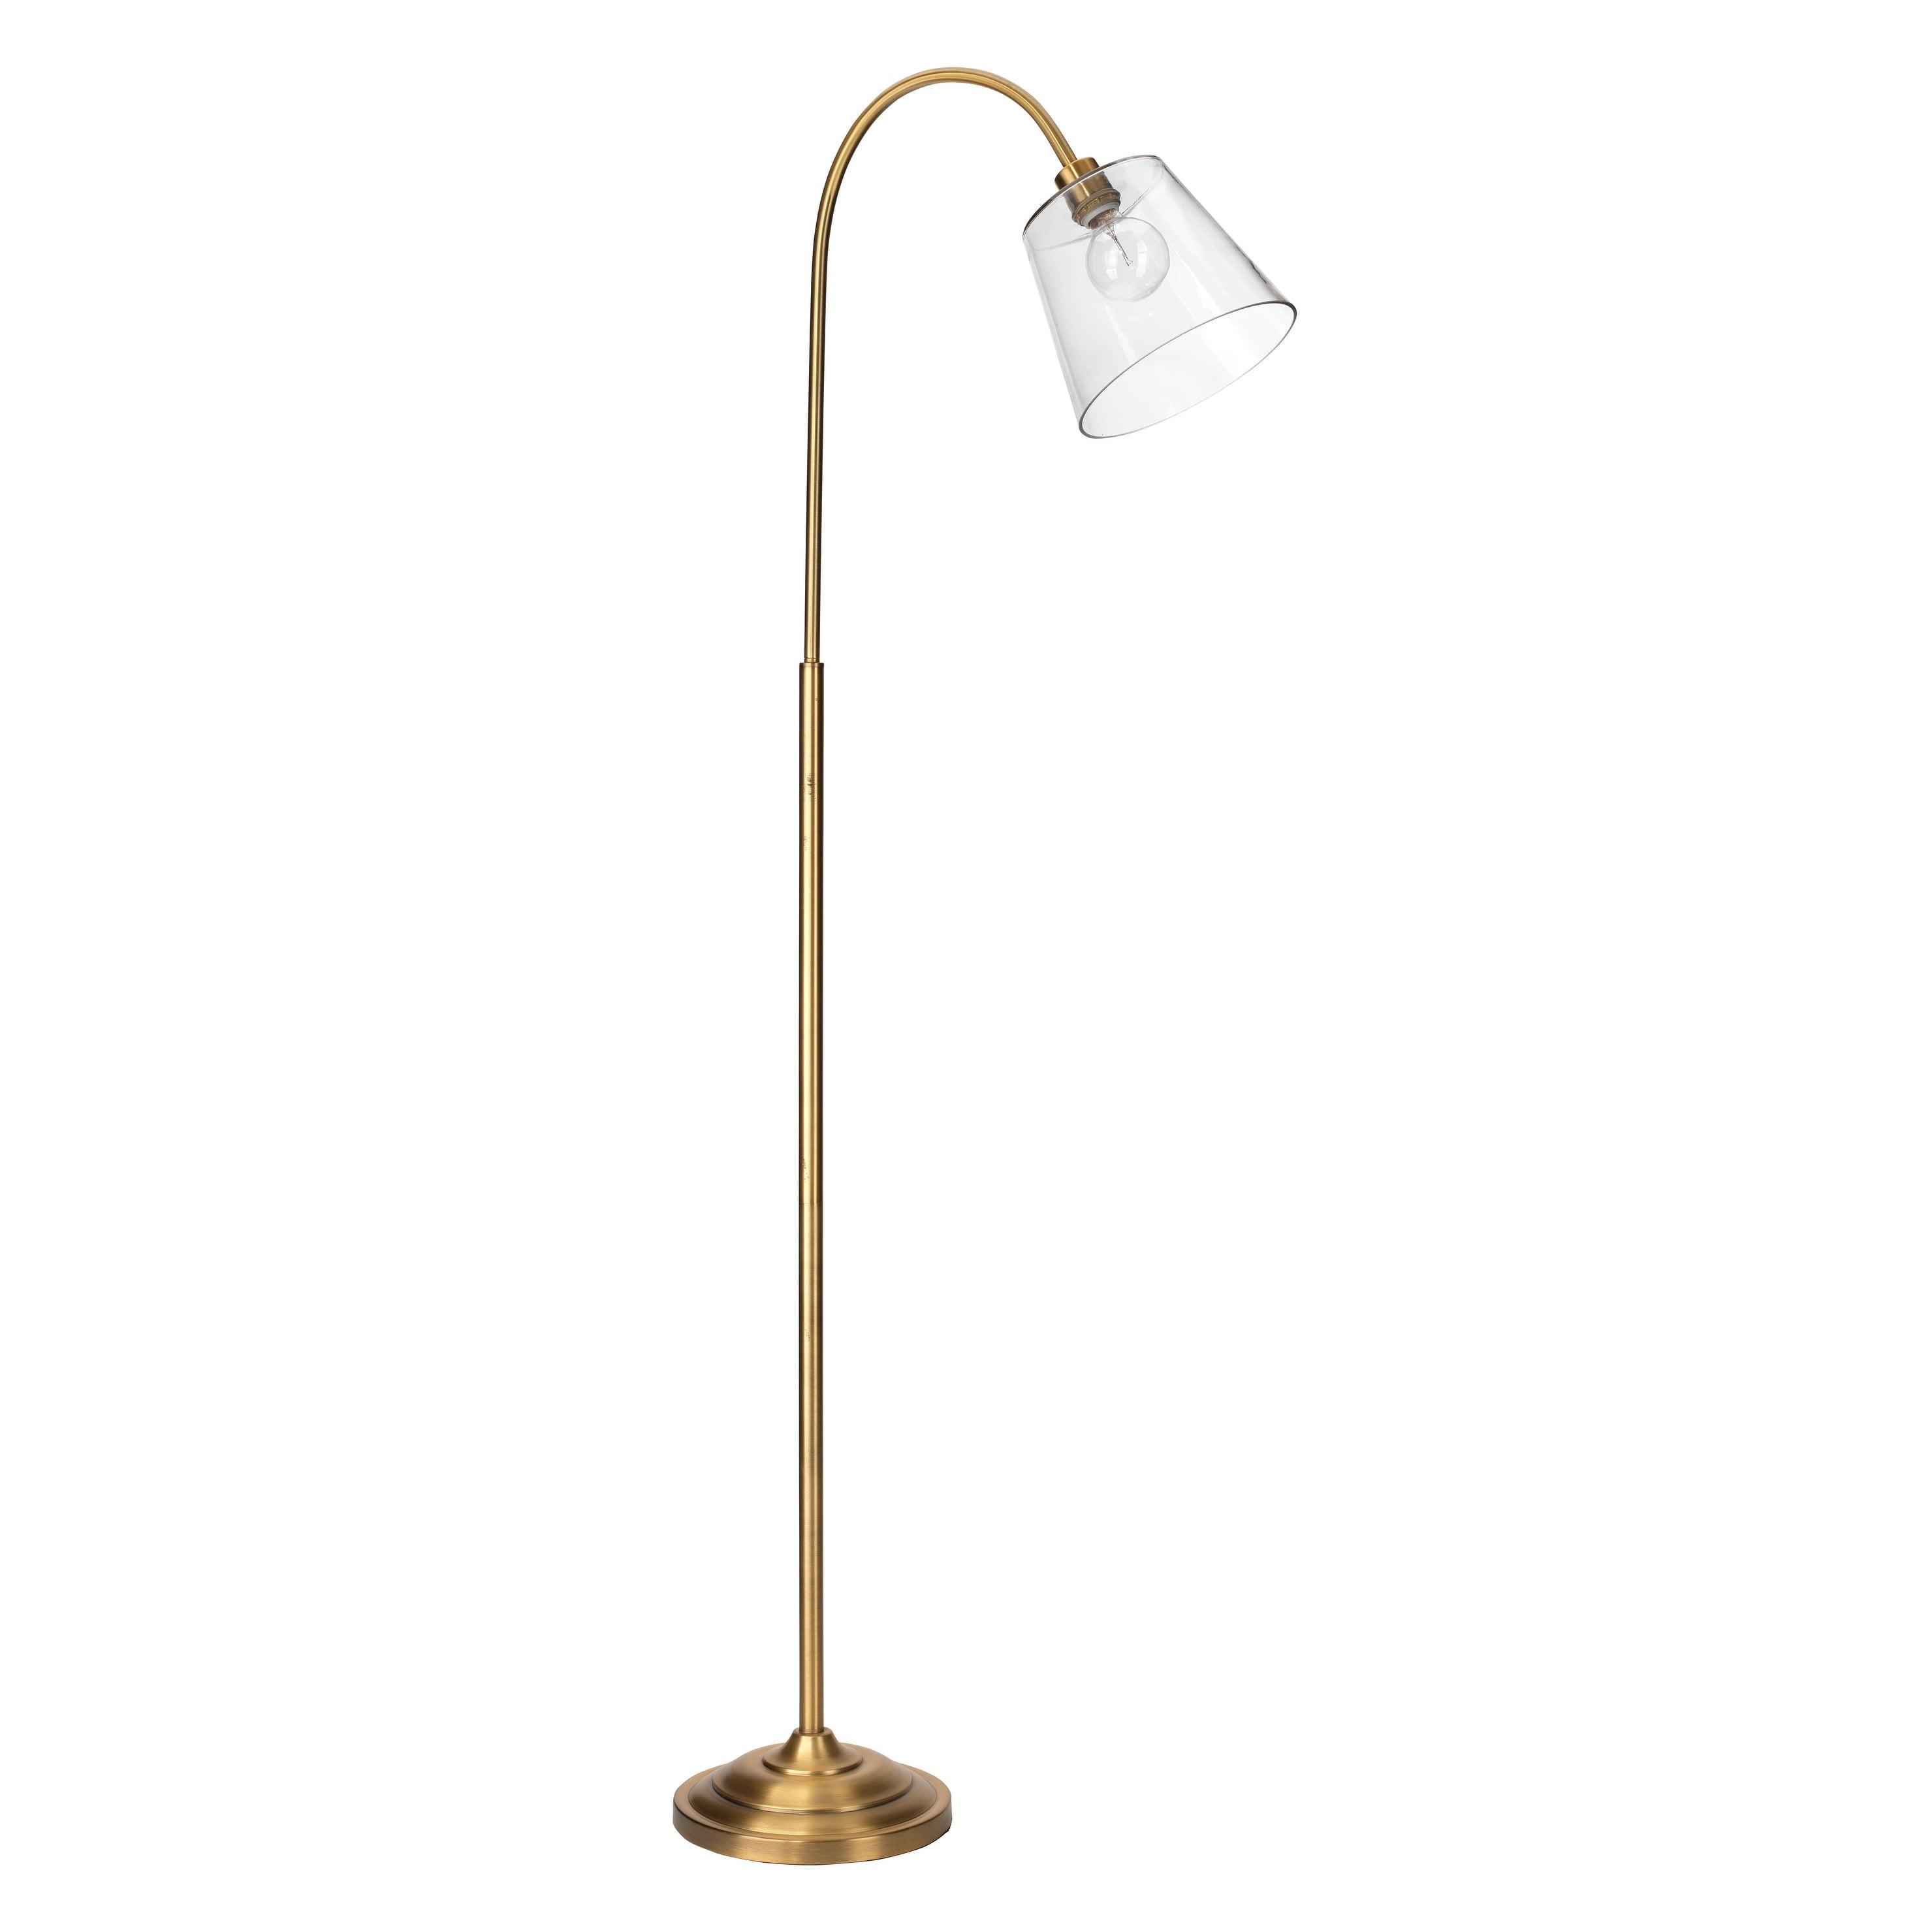 Elegant Edison Bronze Floor Lamp with Oversized Glass Shade